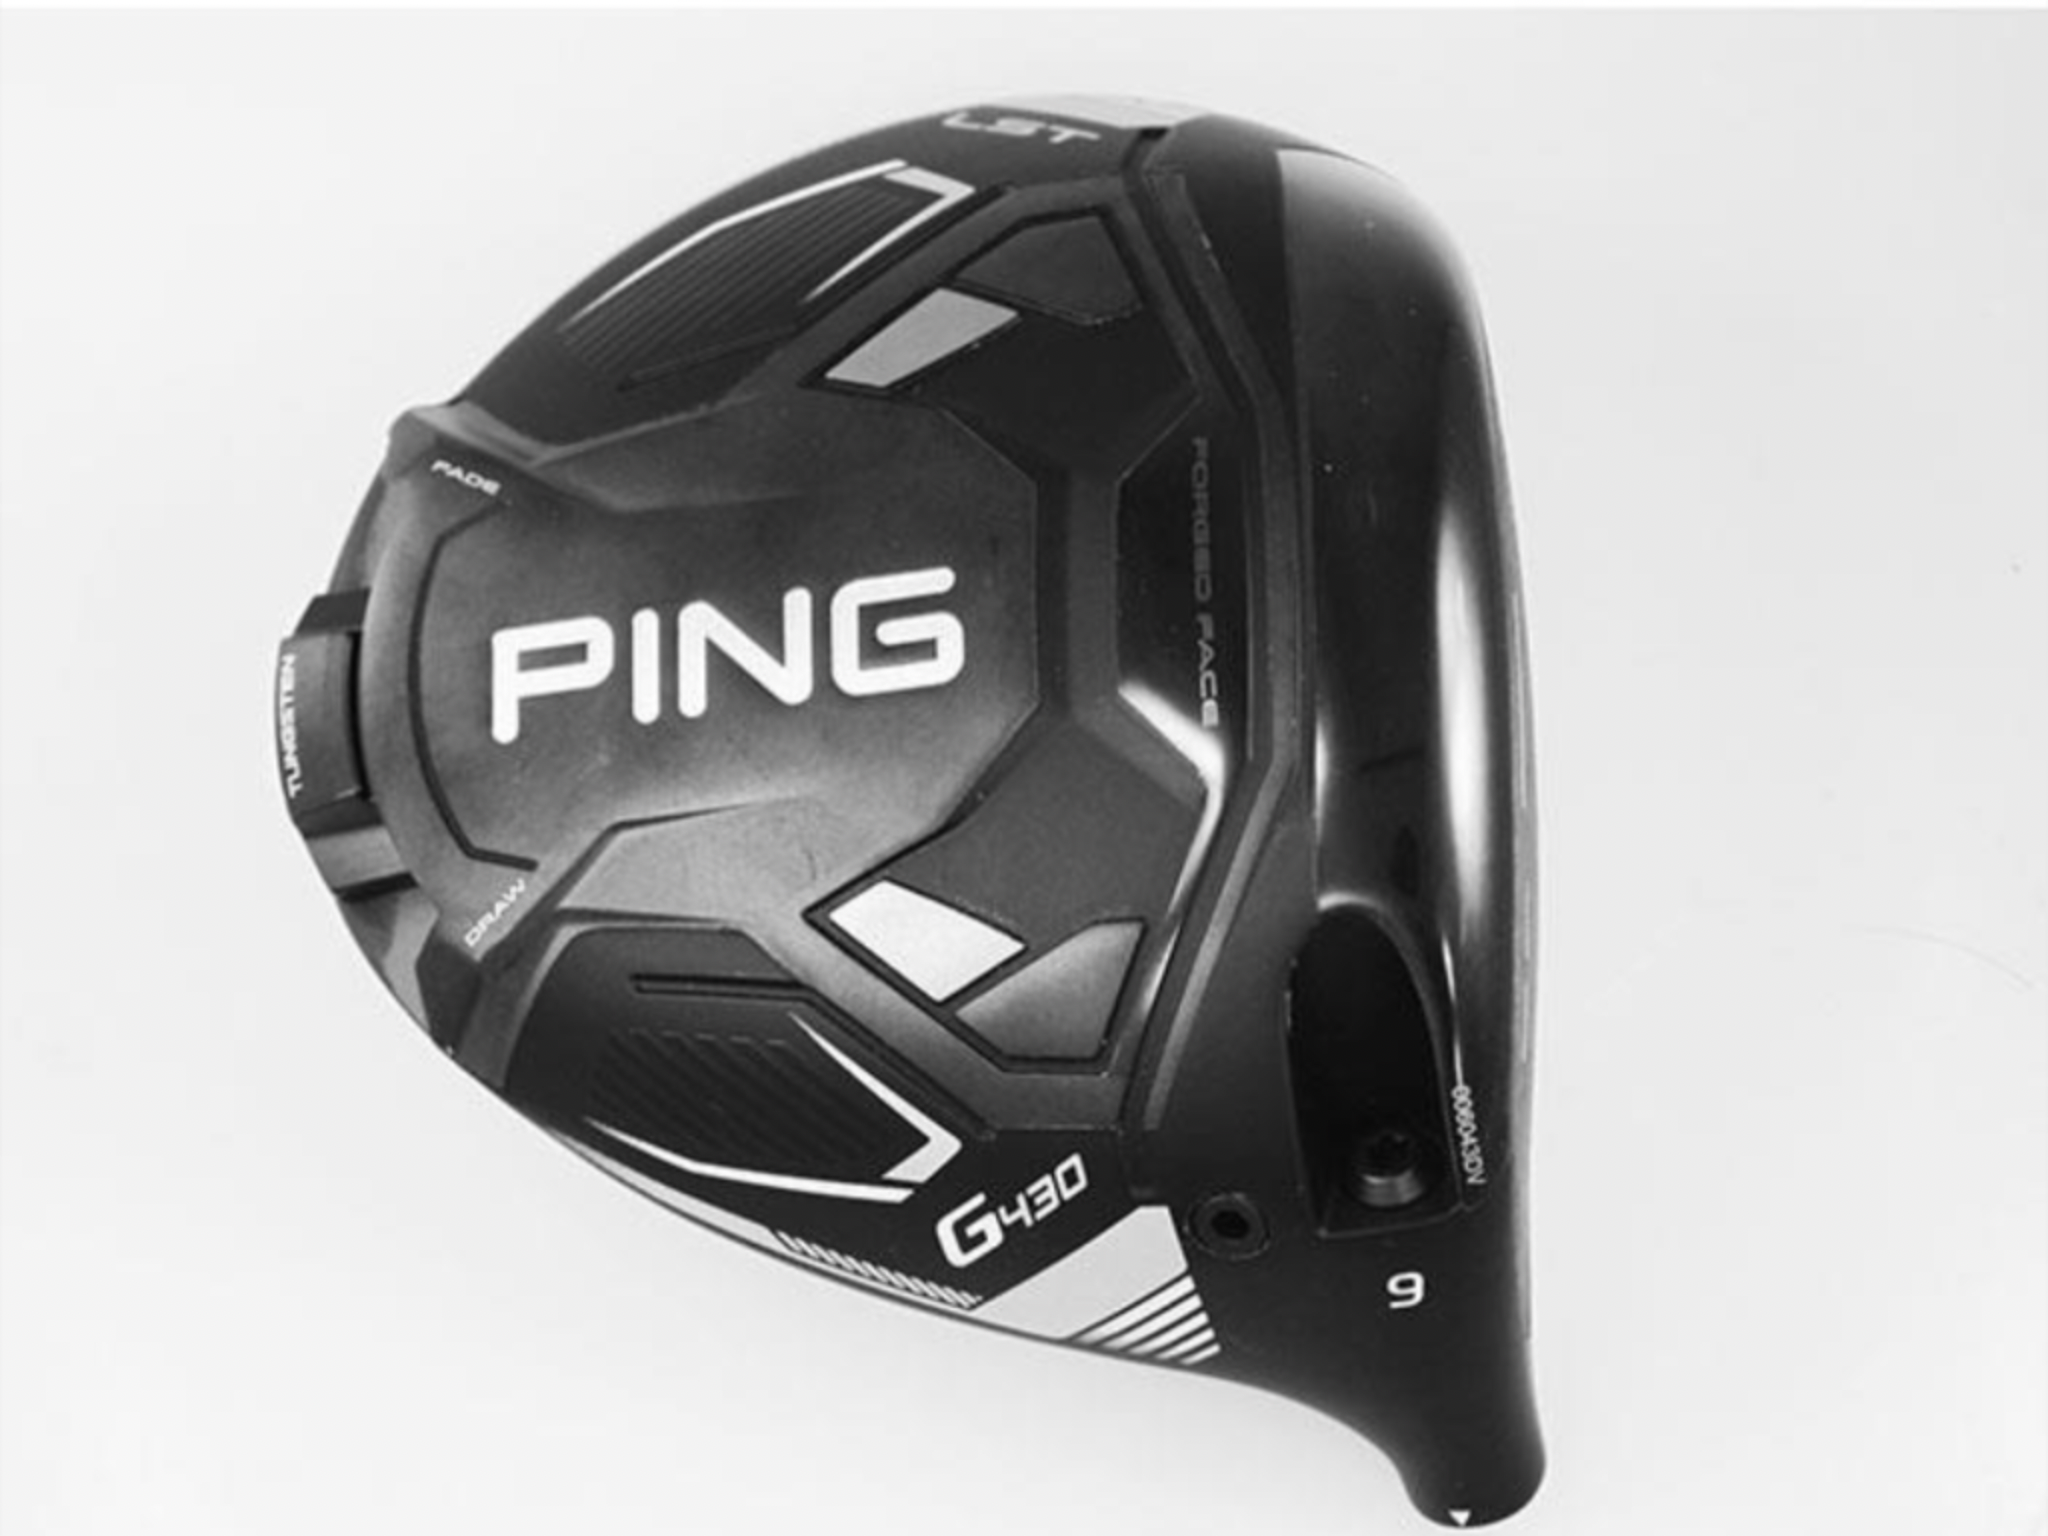 New Ping G430 drivers hit USGA Conforming List – GolfWRX